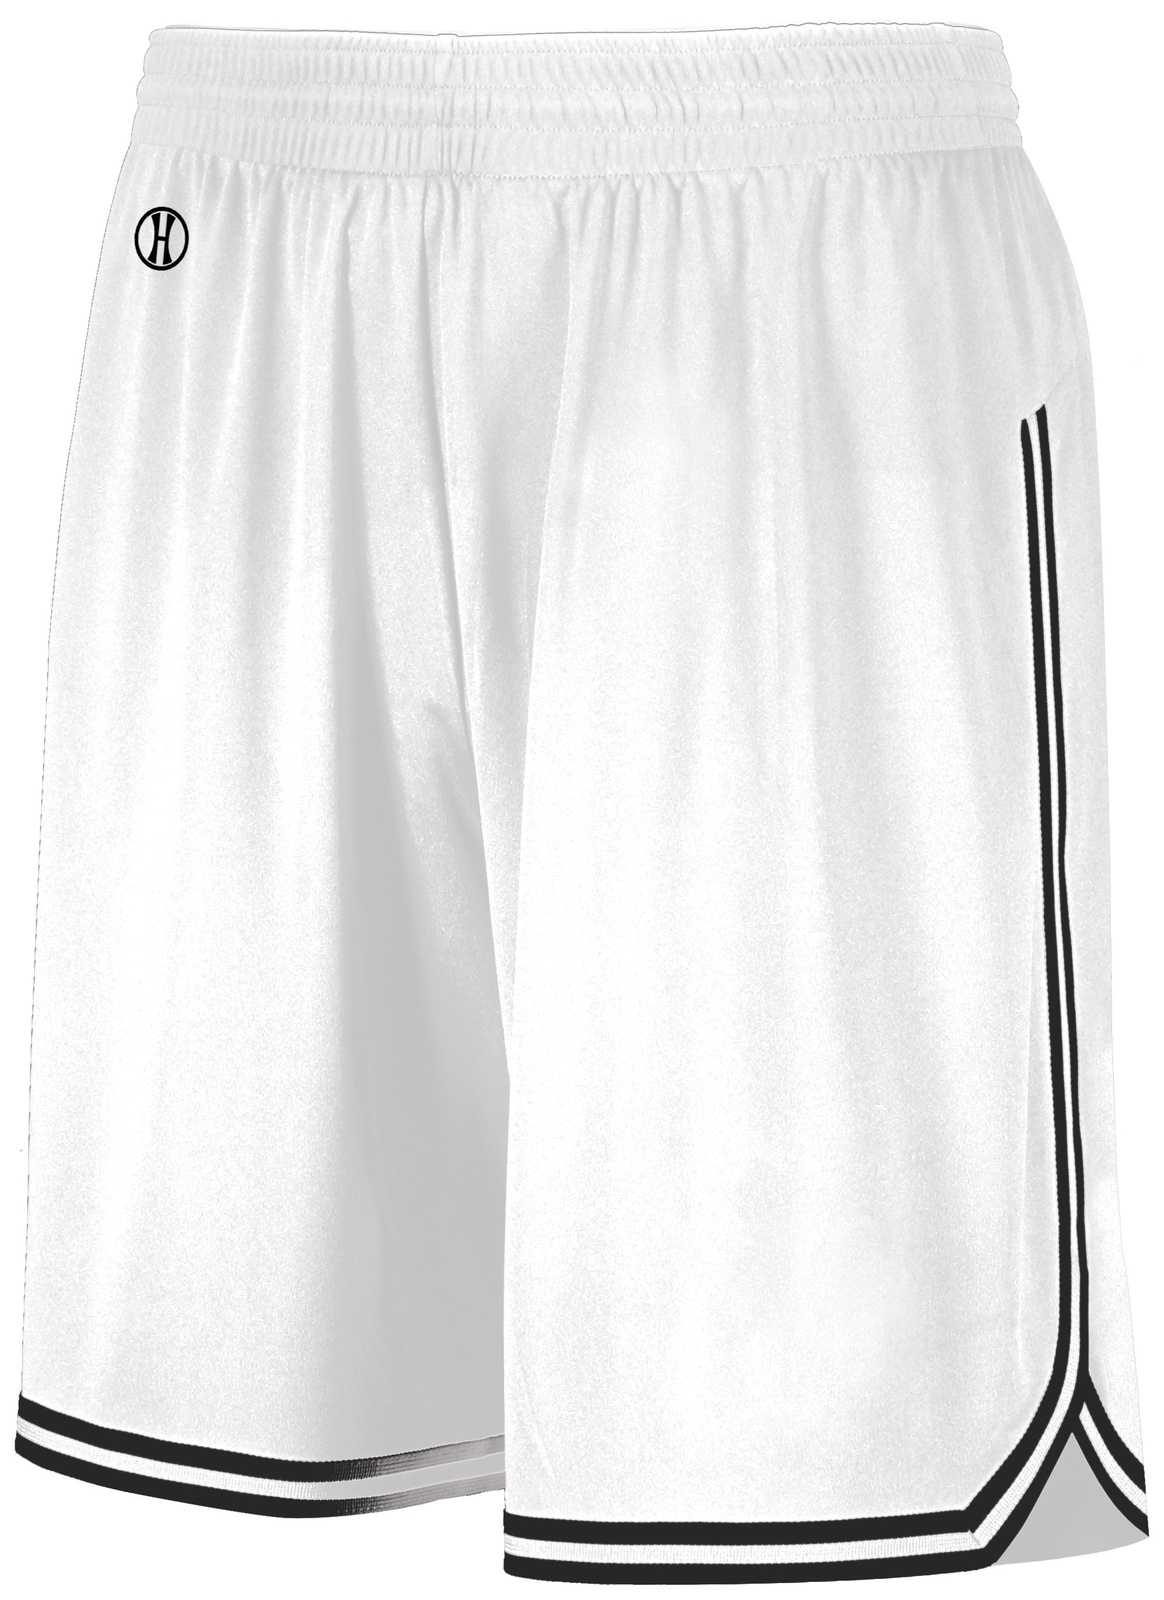 Holloway 224277 Youth Retro Basketball Shorts - White Black